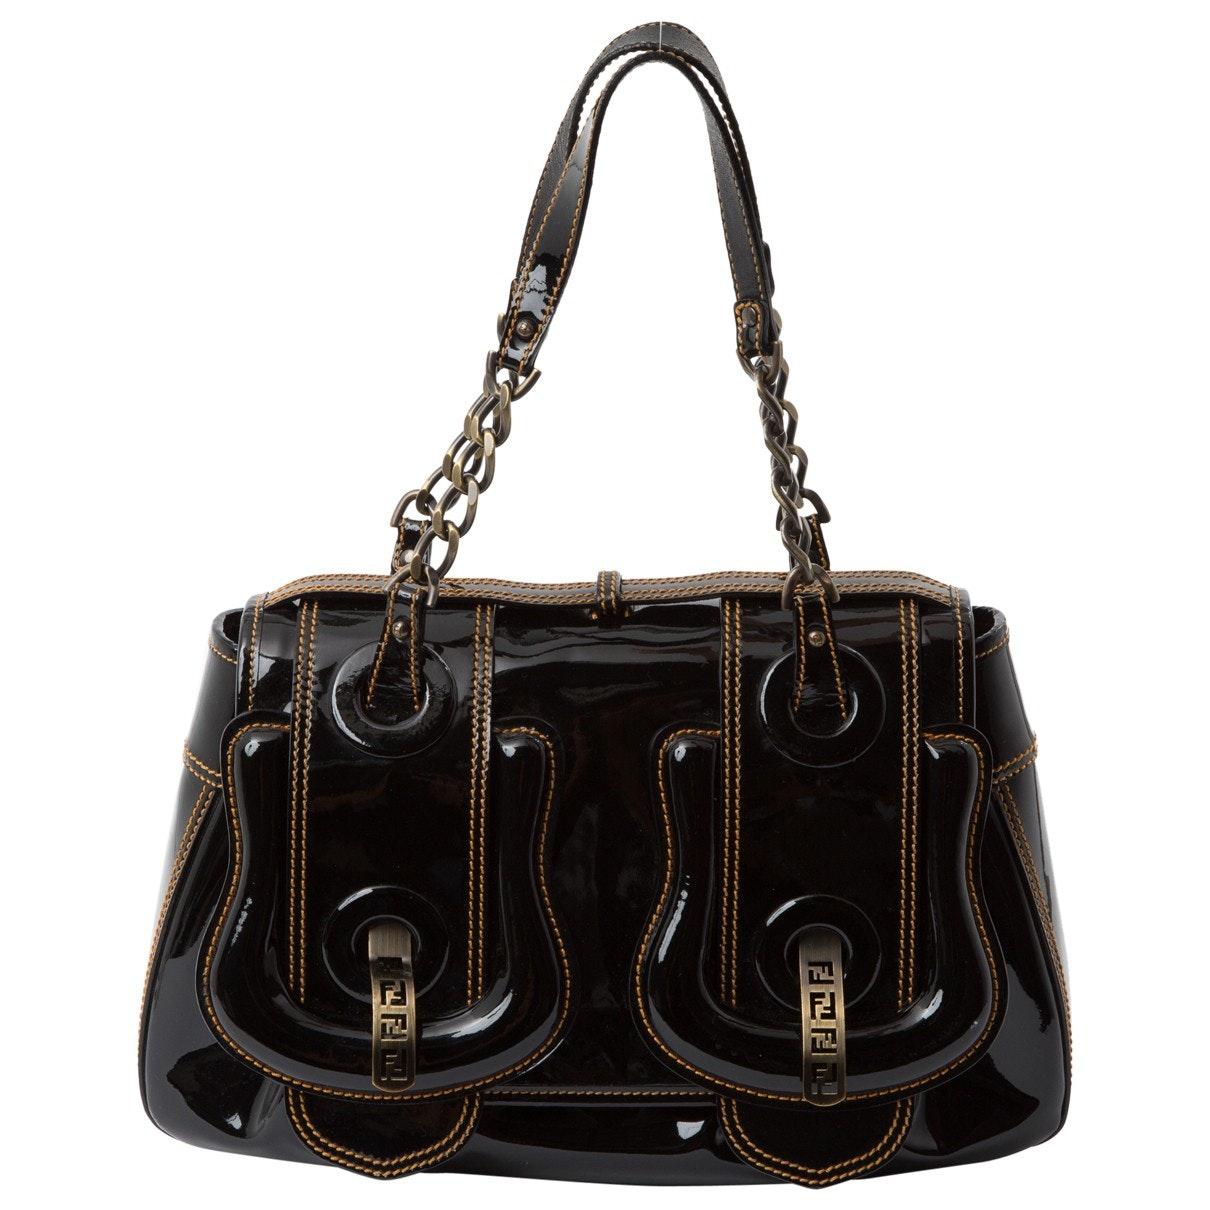 Fendi B Bag Black Patent Leather Handbag - Lyst